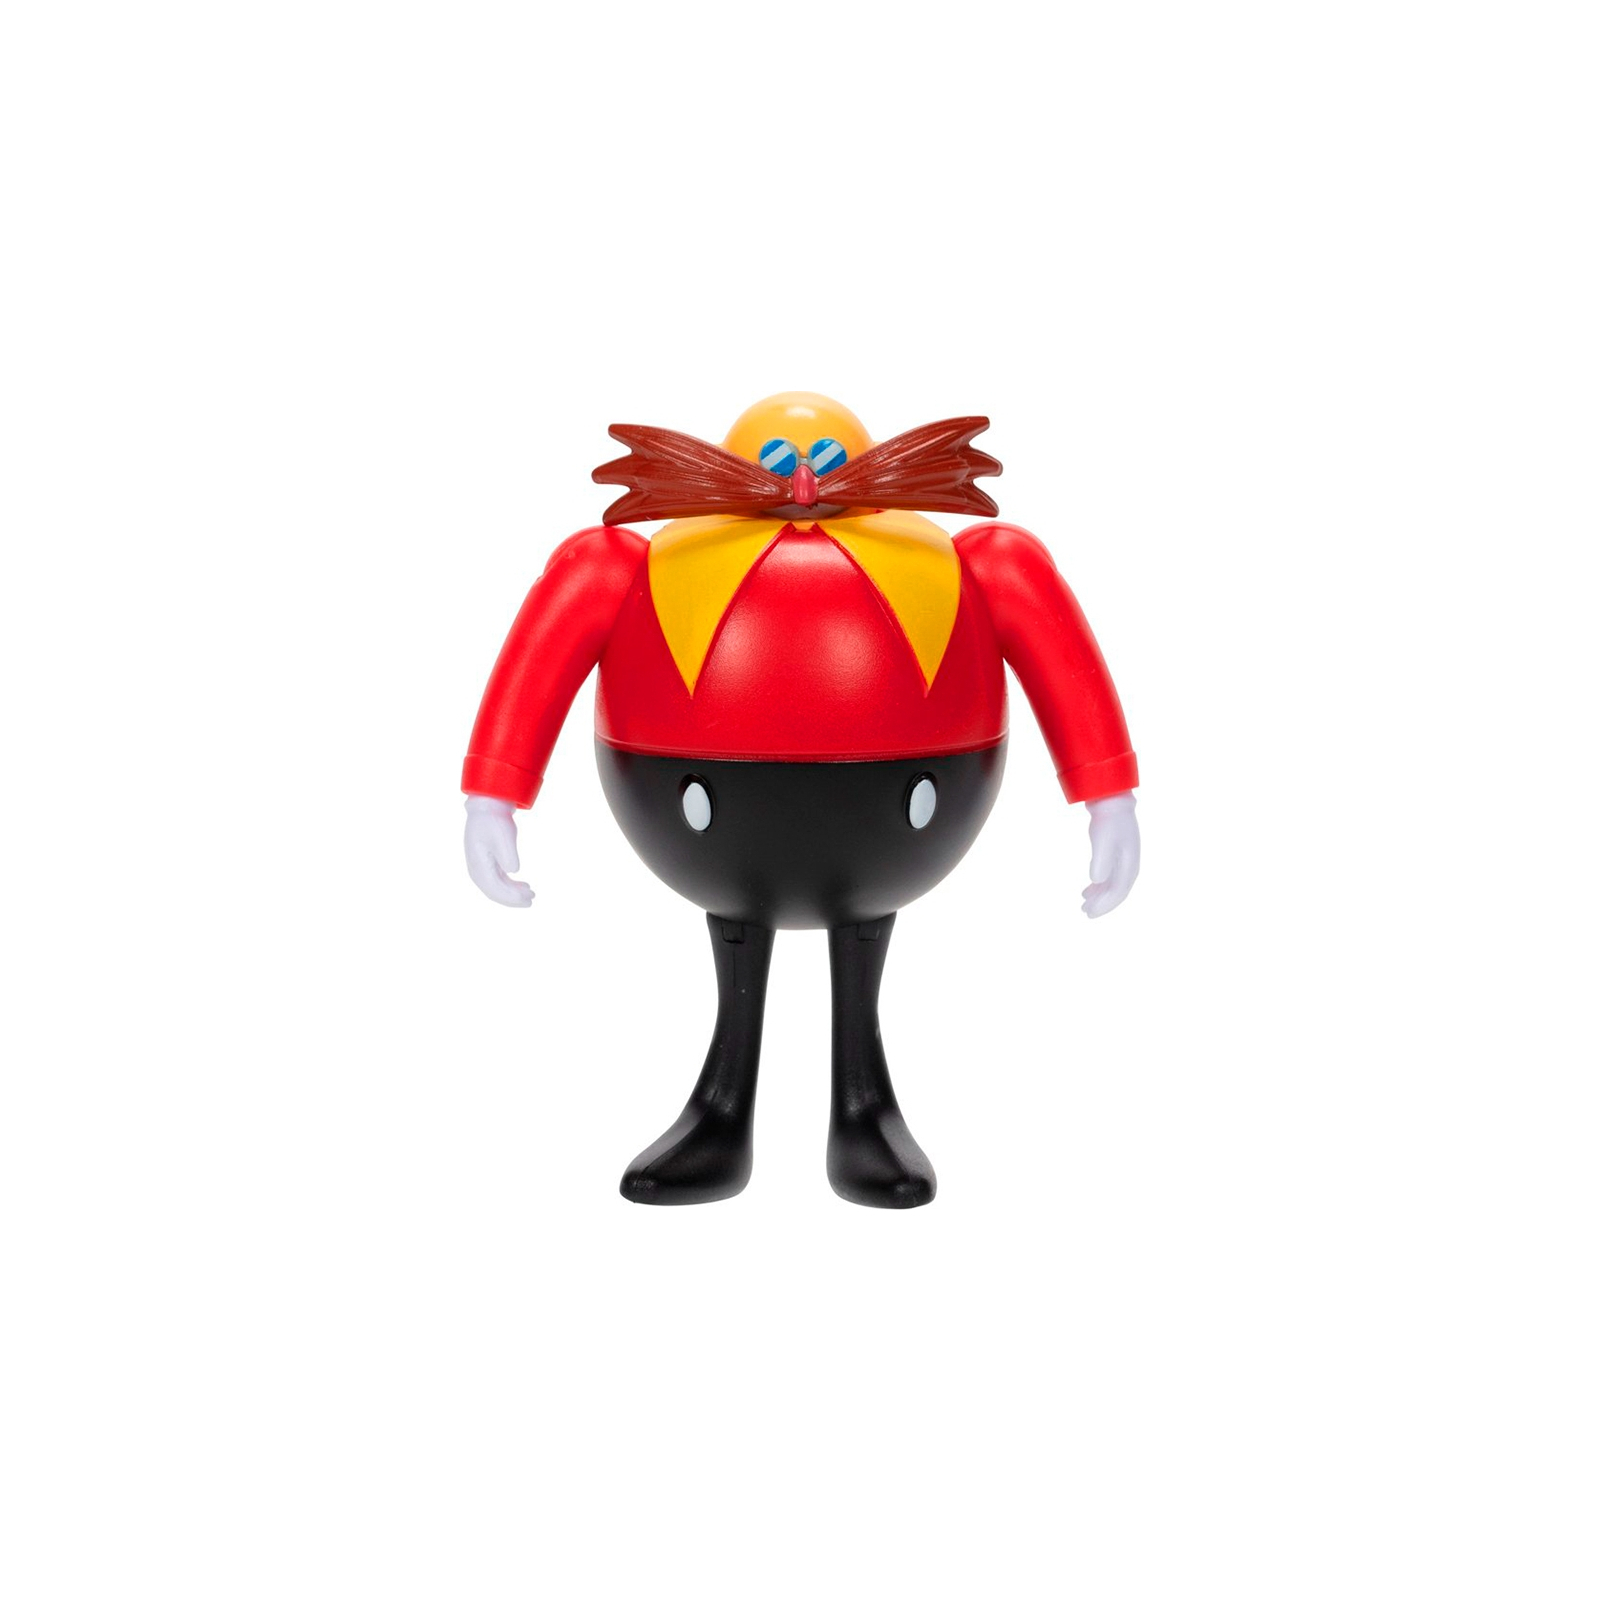 Фигурка Sonic the Hedgehog с артикуляцией - Классический Доктор Эггман 6 см (41435i) изображение 2